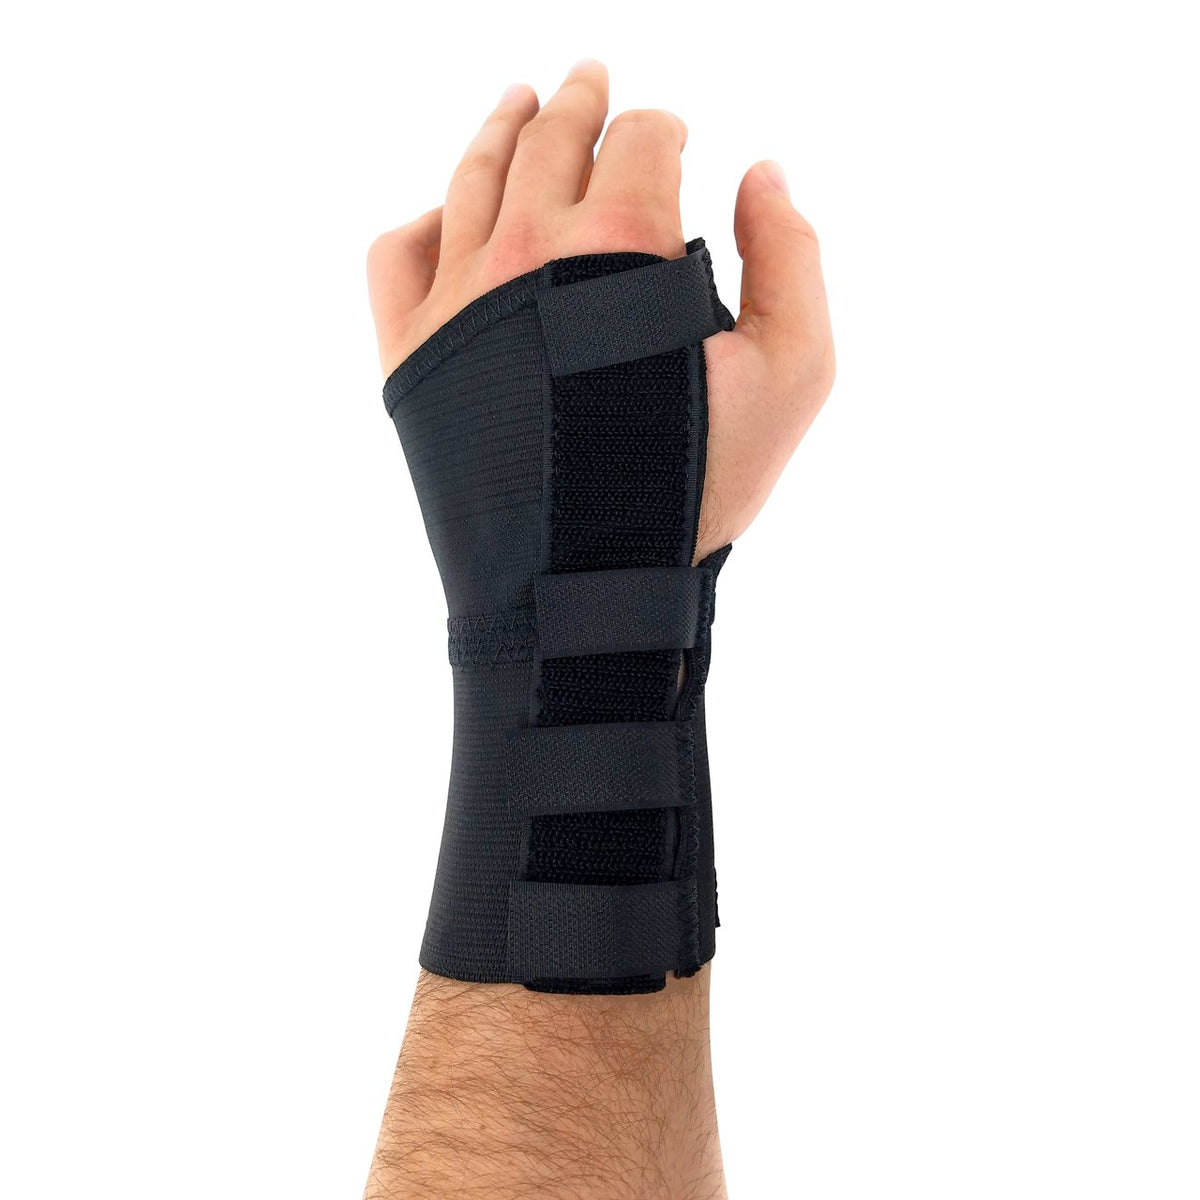 NEW Premium Custom Wrist Brace Support - With Removable Metal Splint / Stays - Mars Med Supply